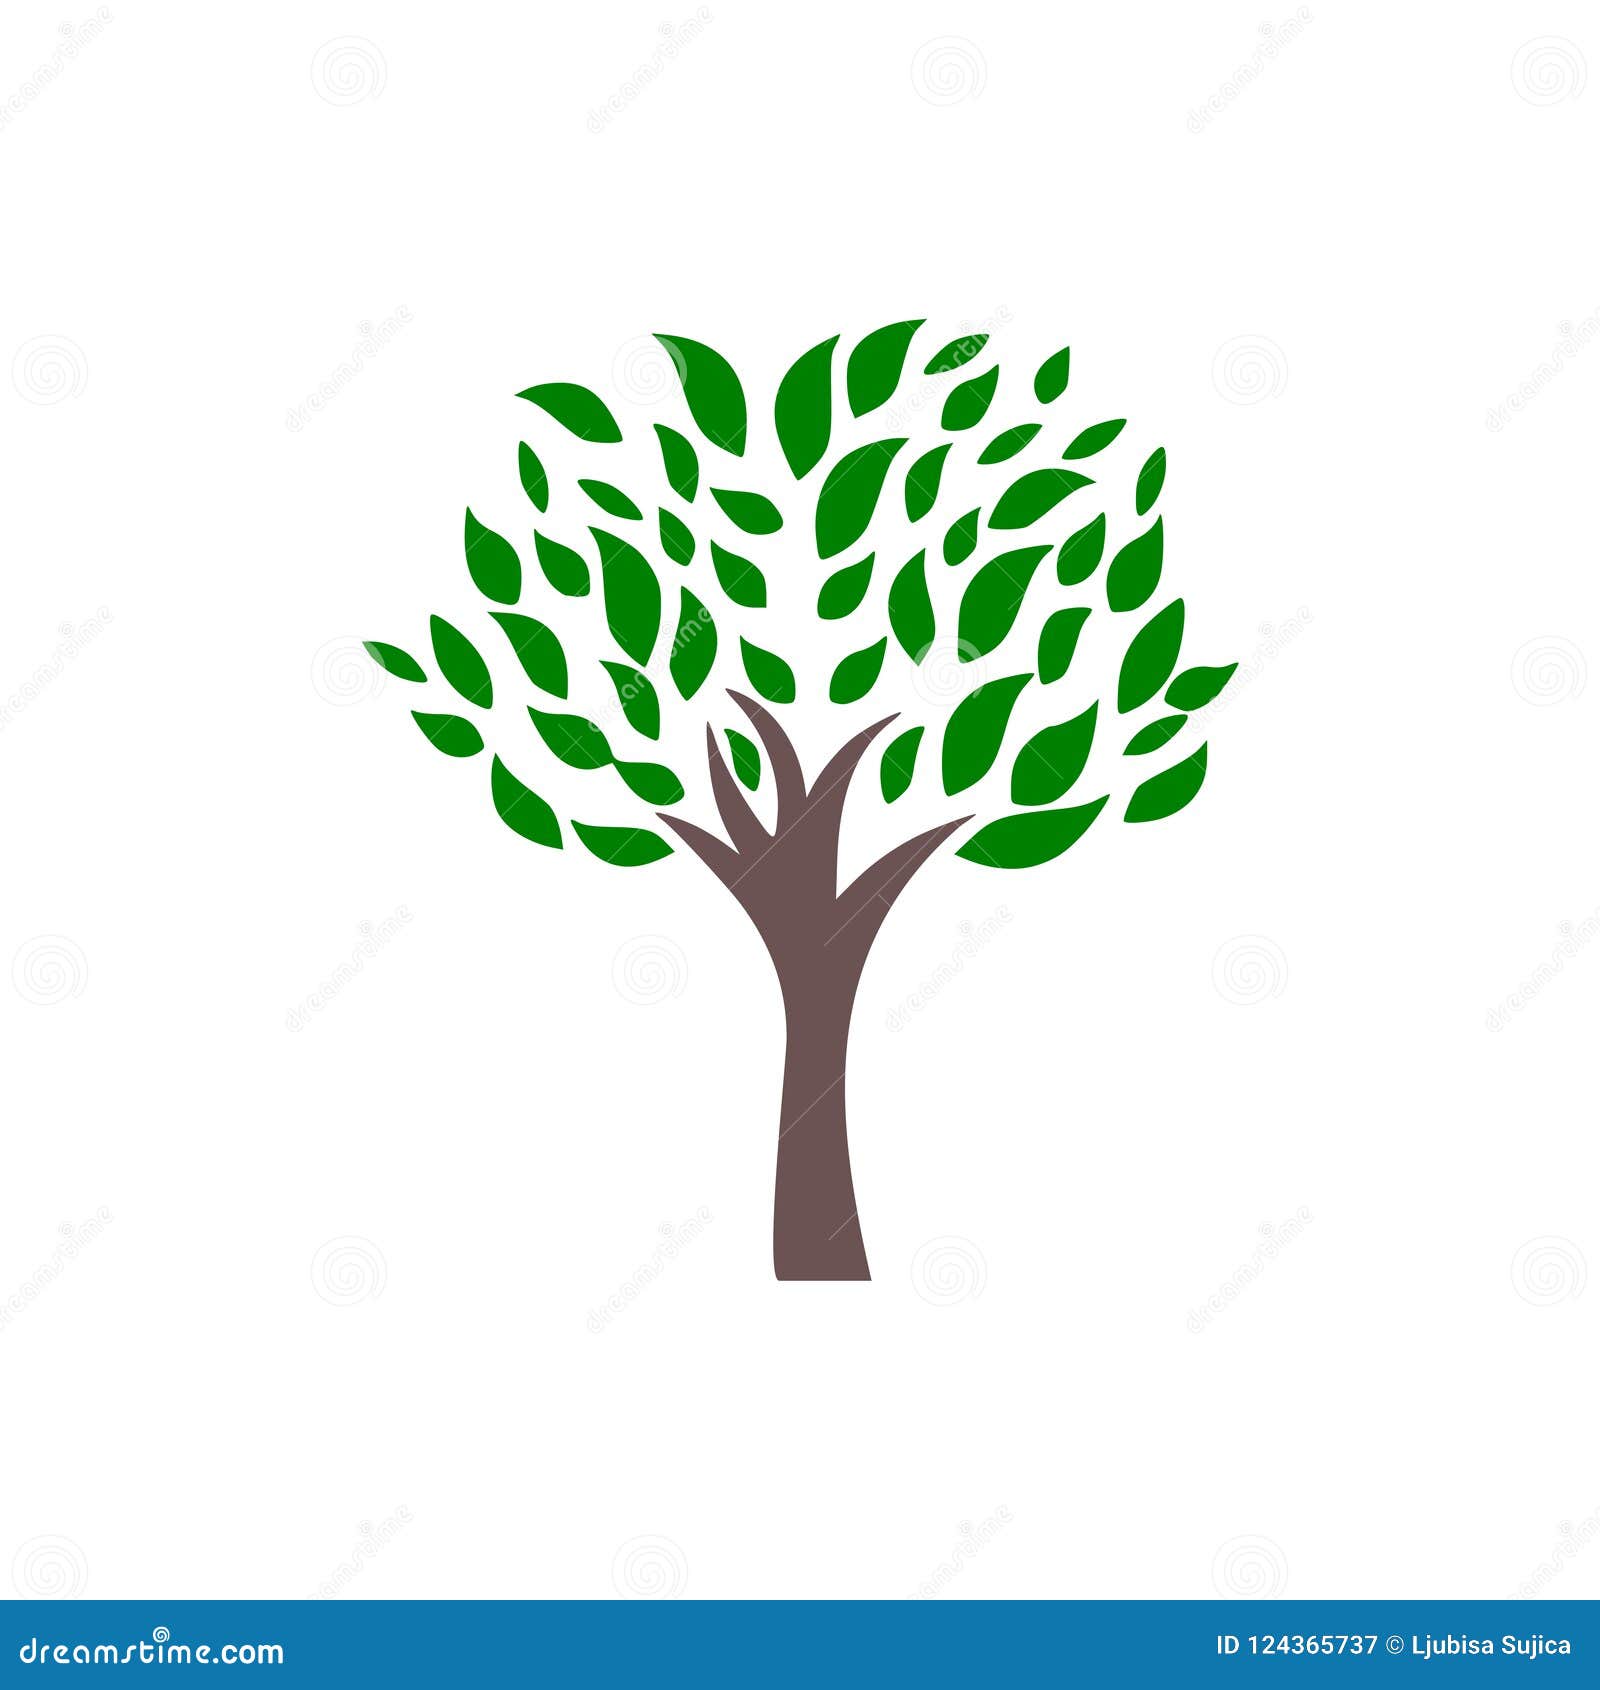 Free Treehouse Logo Designs | DesignEvo Logo Maker